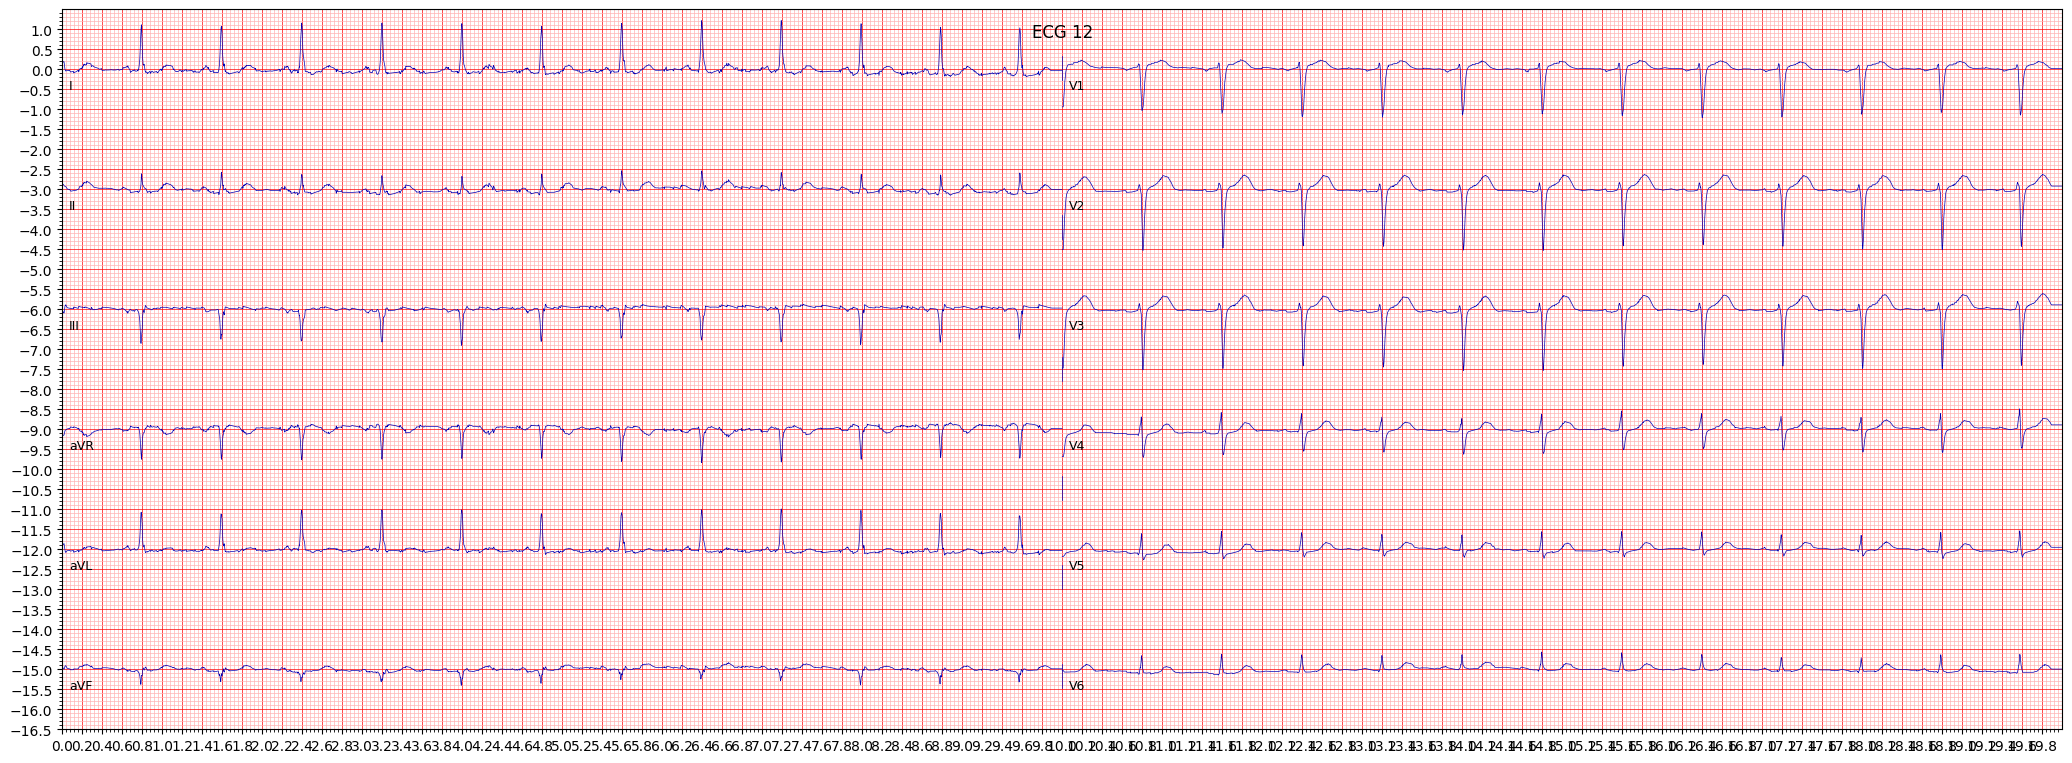 inferolateral myocardial infarction (ILMI) example 1935